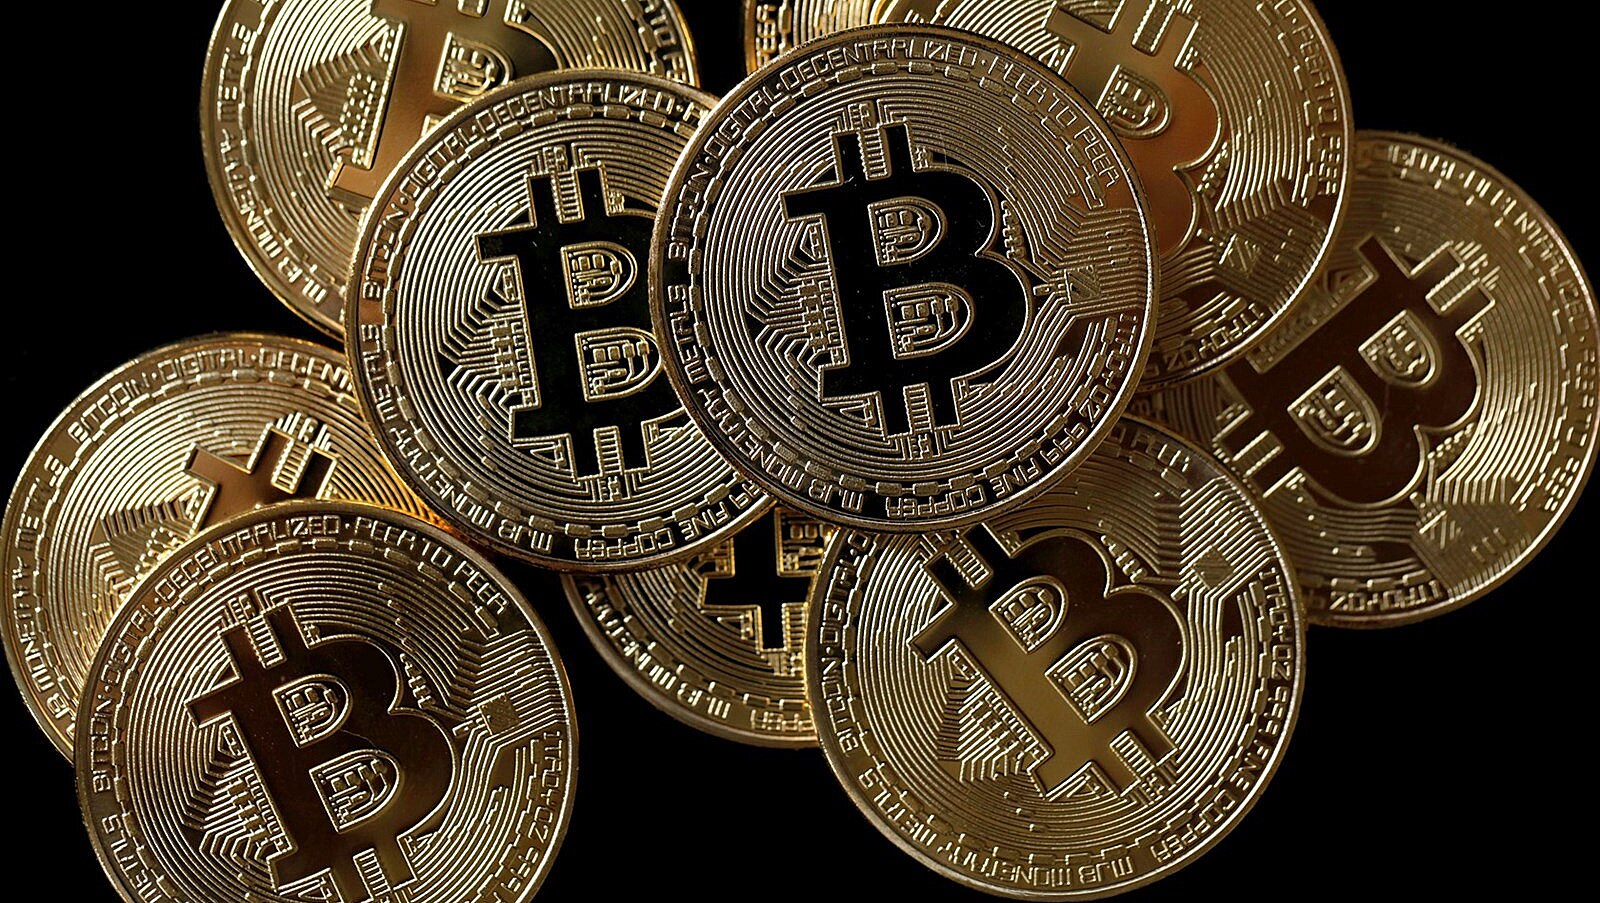 Bitcoin bude mít do deseti let hodnotu 100 dolarů, říká ekonom z Harvardu -  iDNES.cz